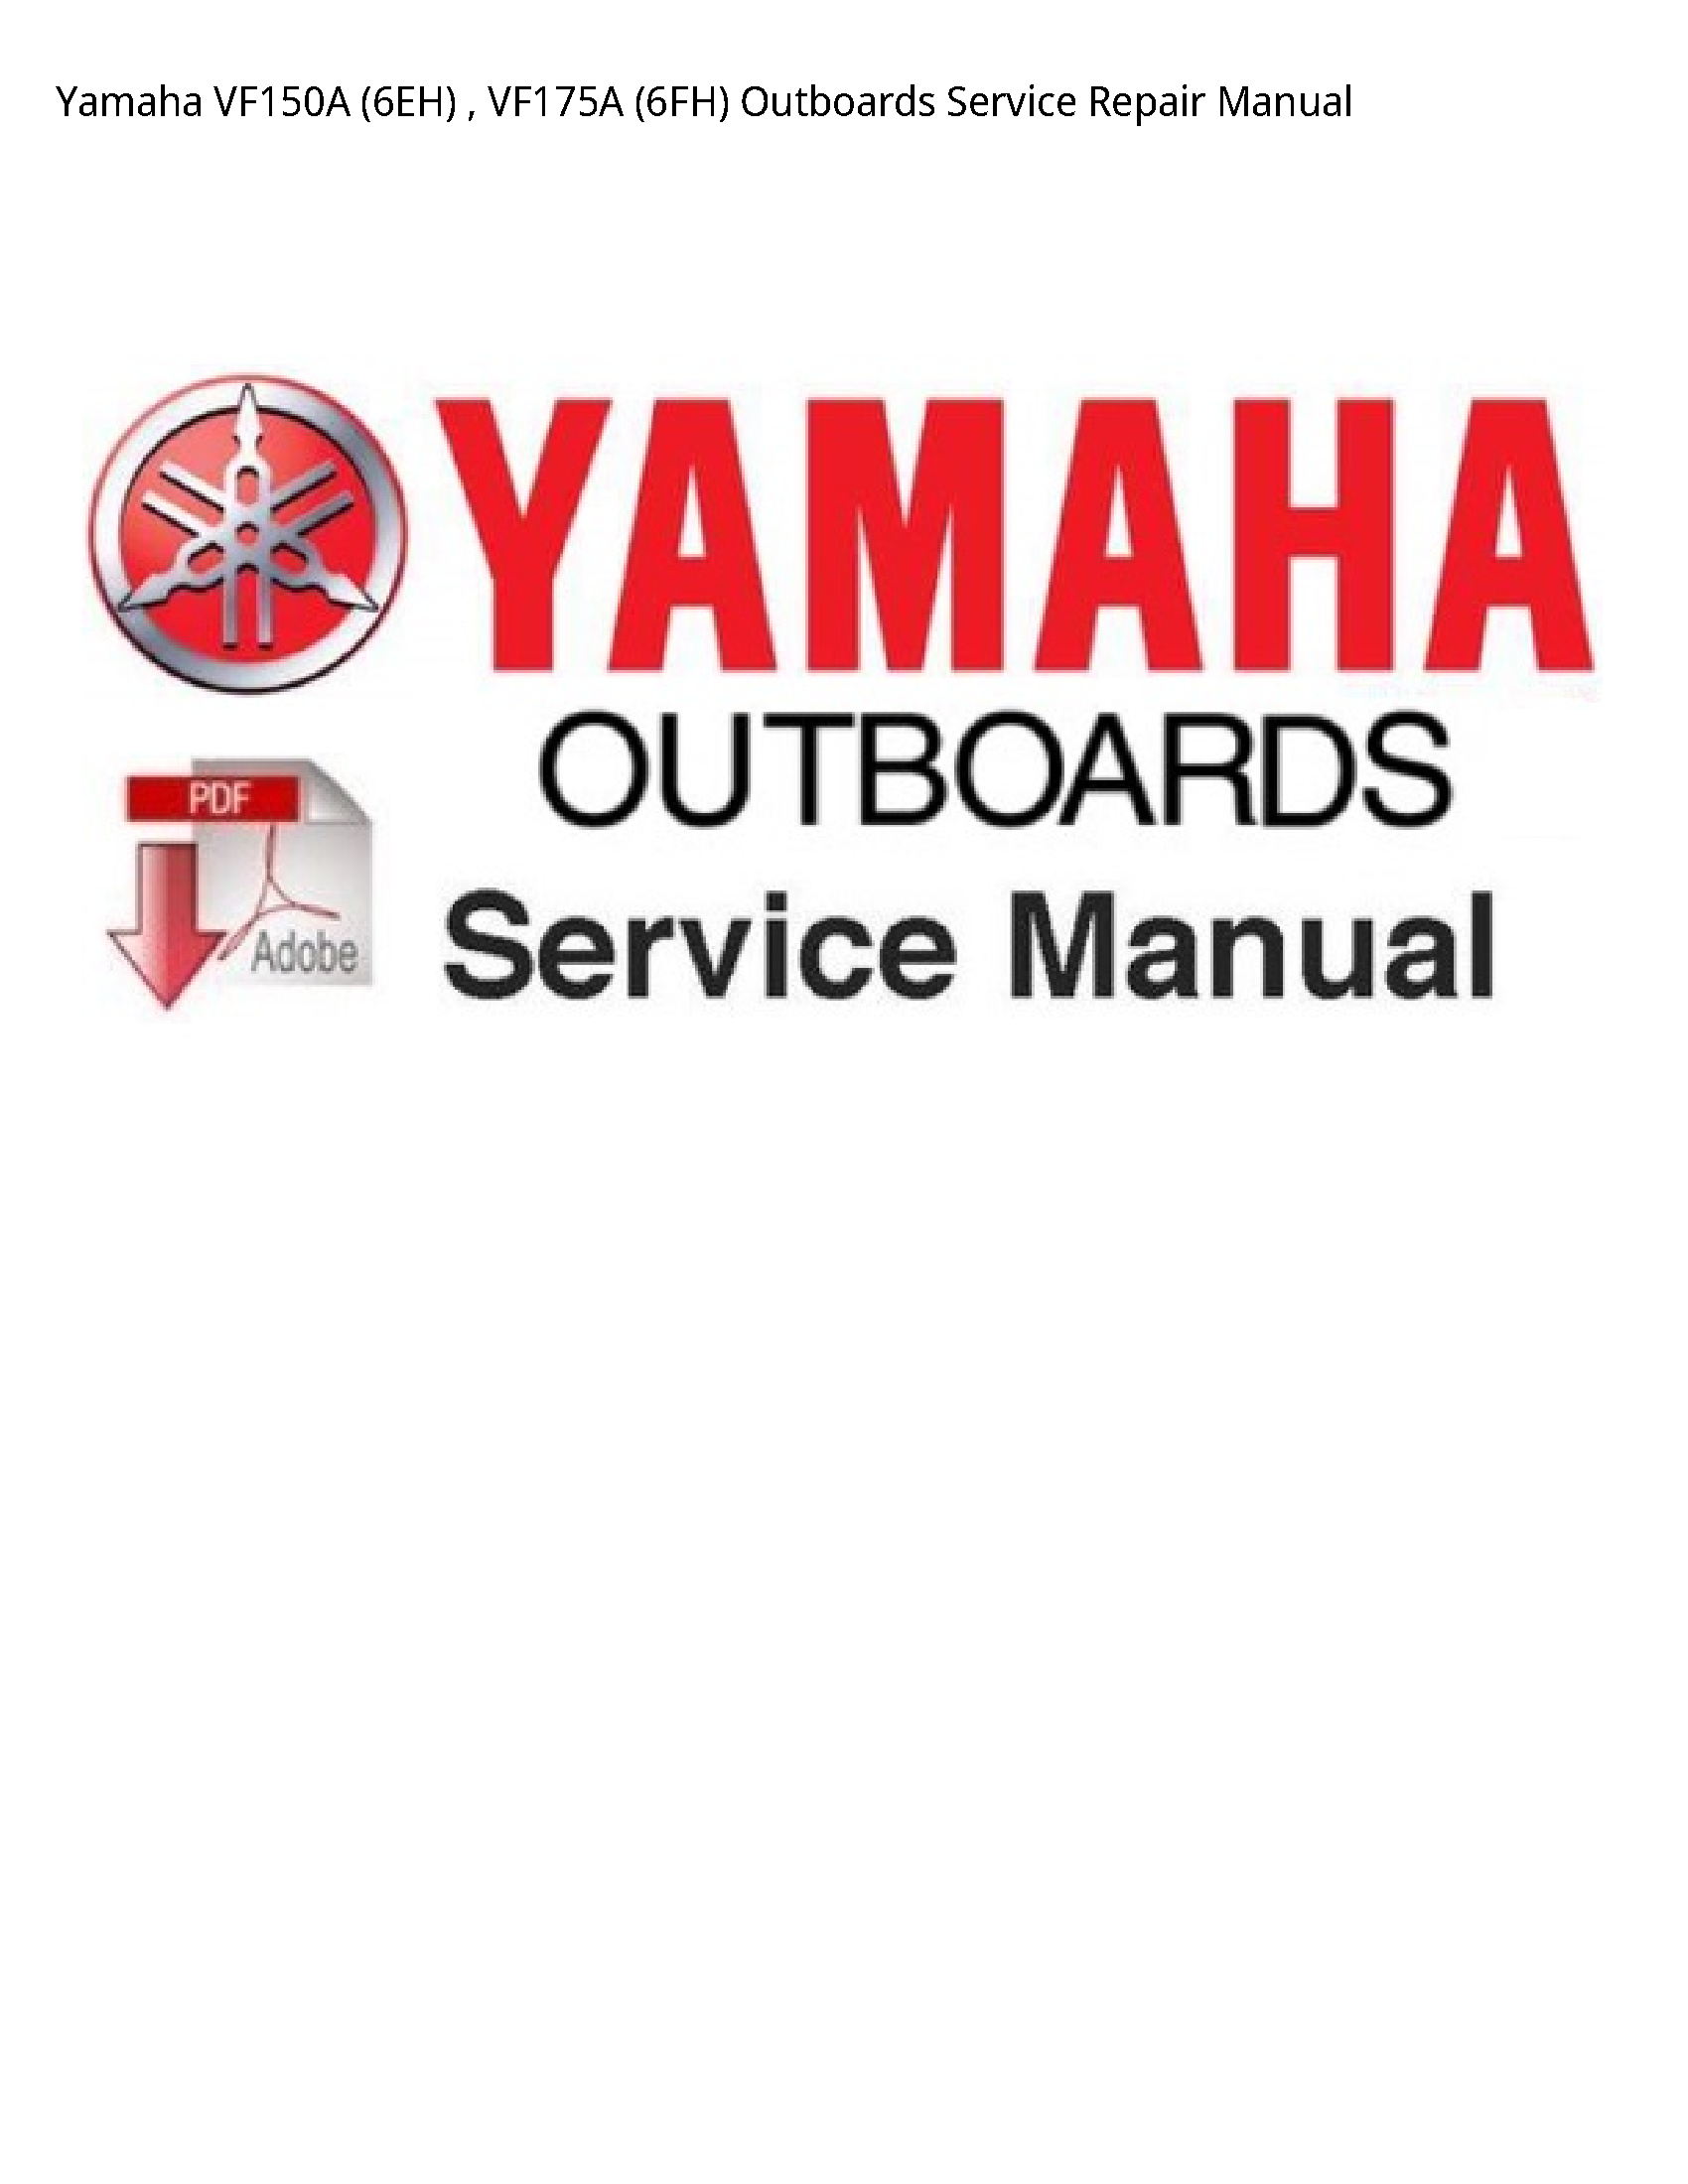 Yamaha VF150A Outboards manual